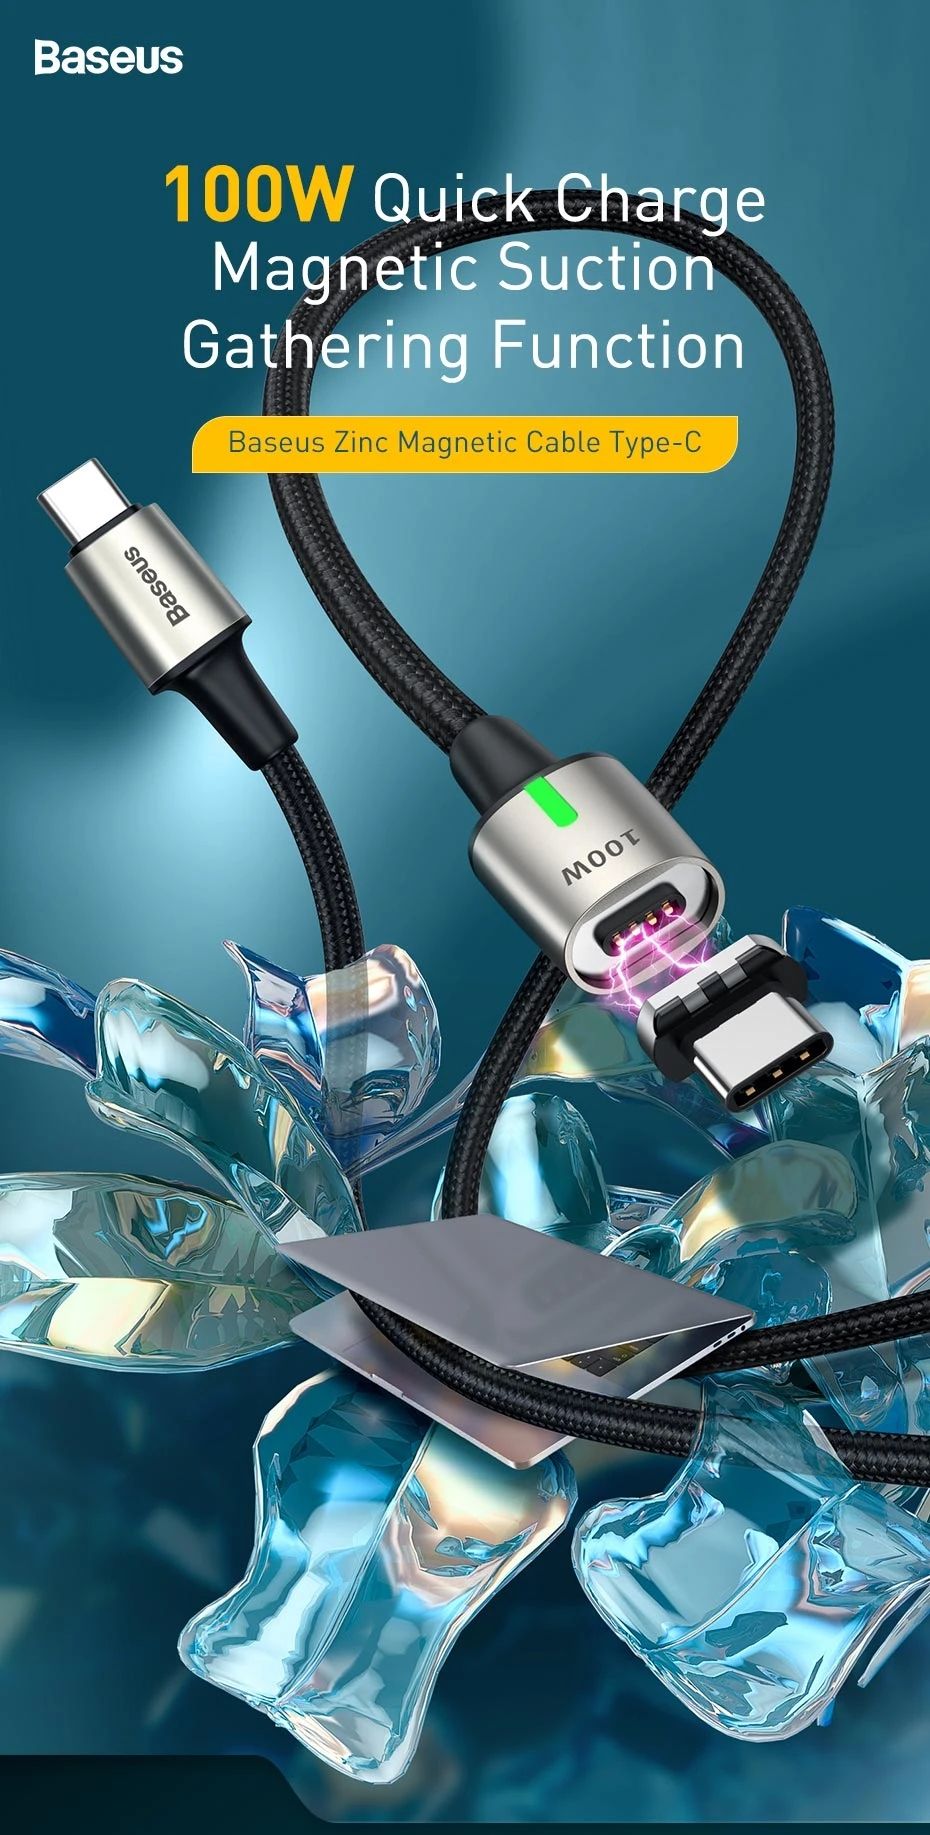 BlitzWolfreg-BW-S16-75W-6-Port-USB-PD-Charger-Desktop-Charging-Station-Dual-PD30-QC30-With-Baseus-10-1733124